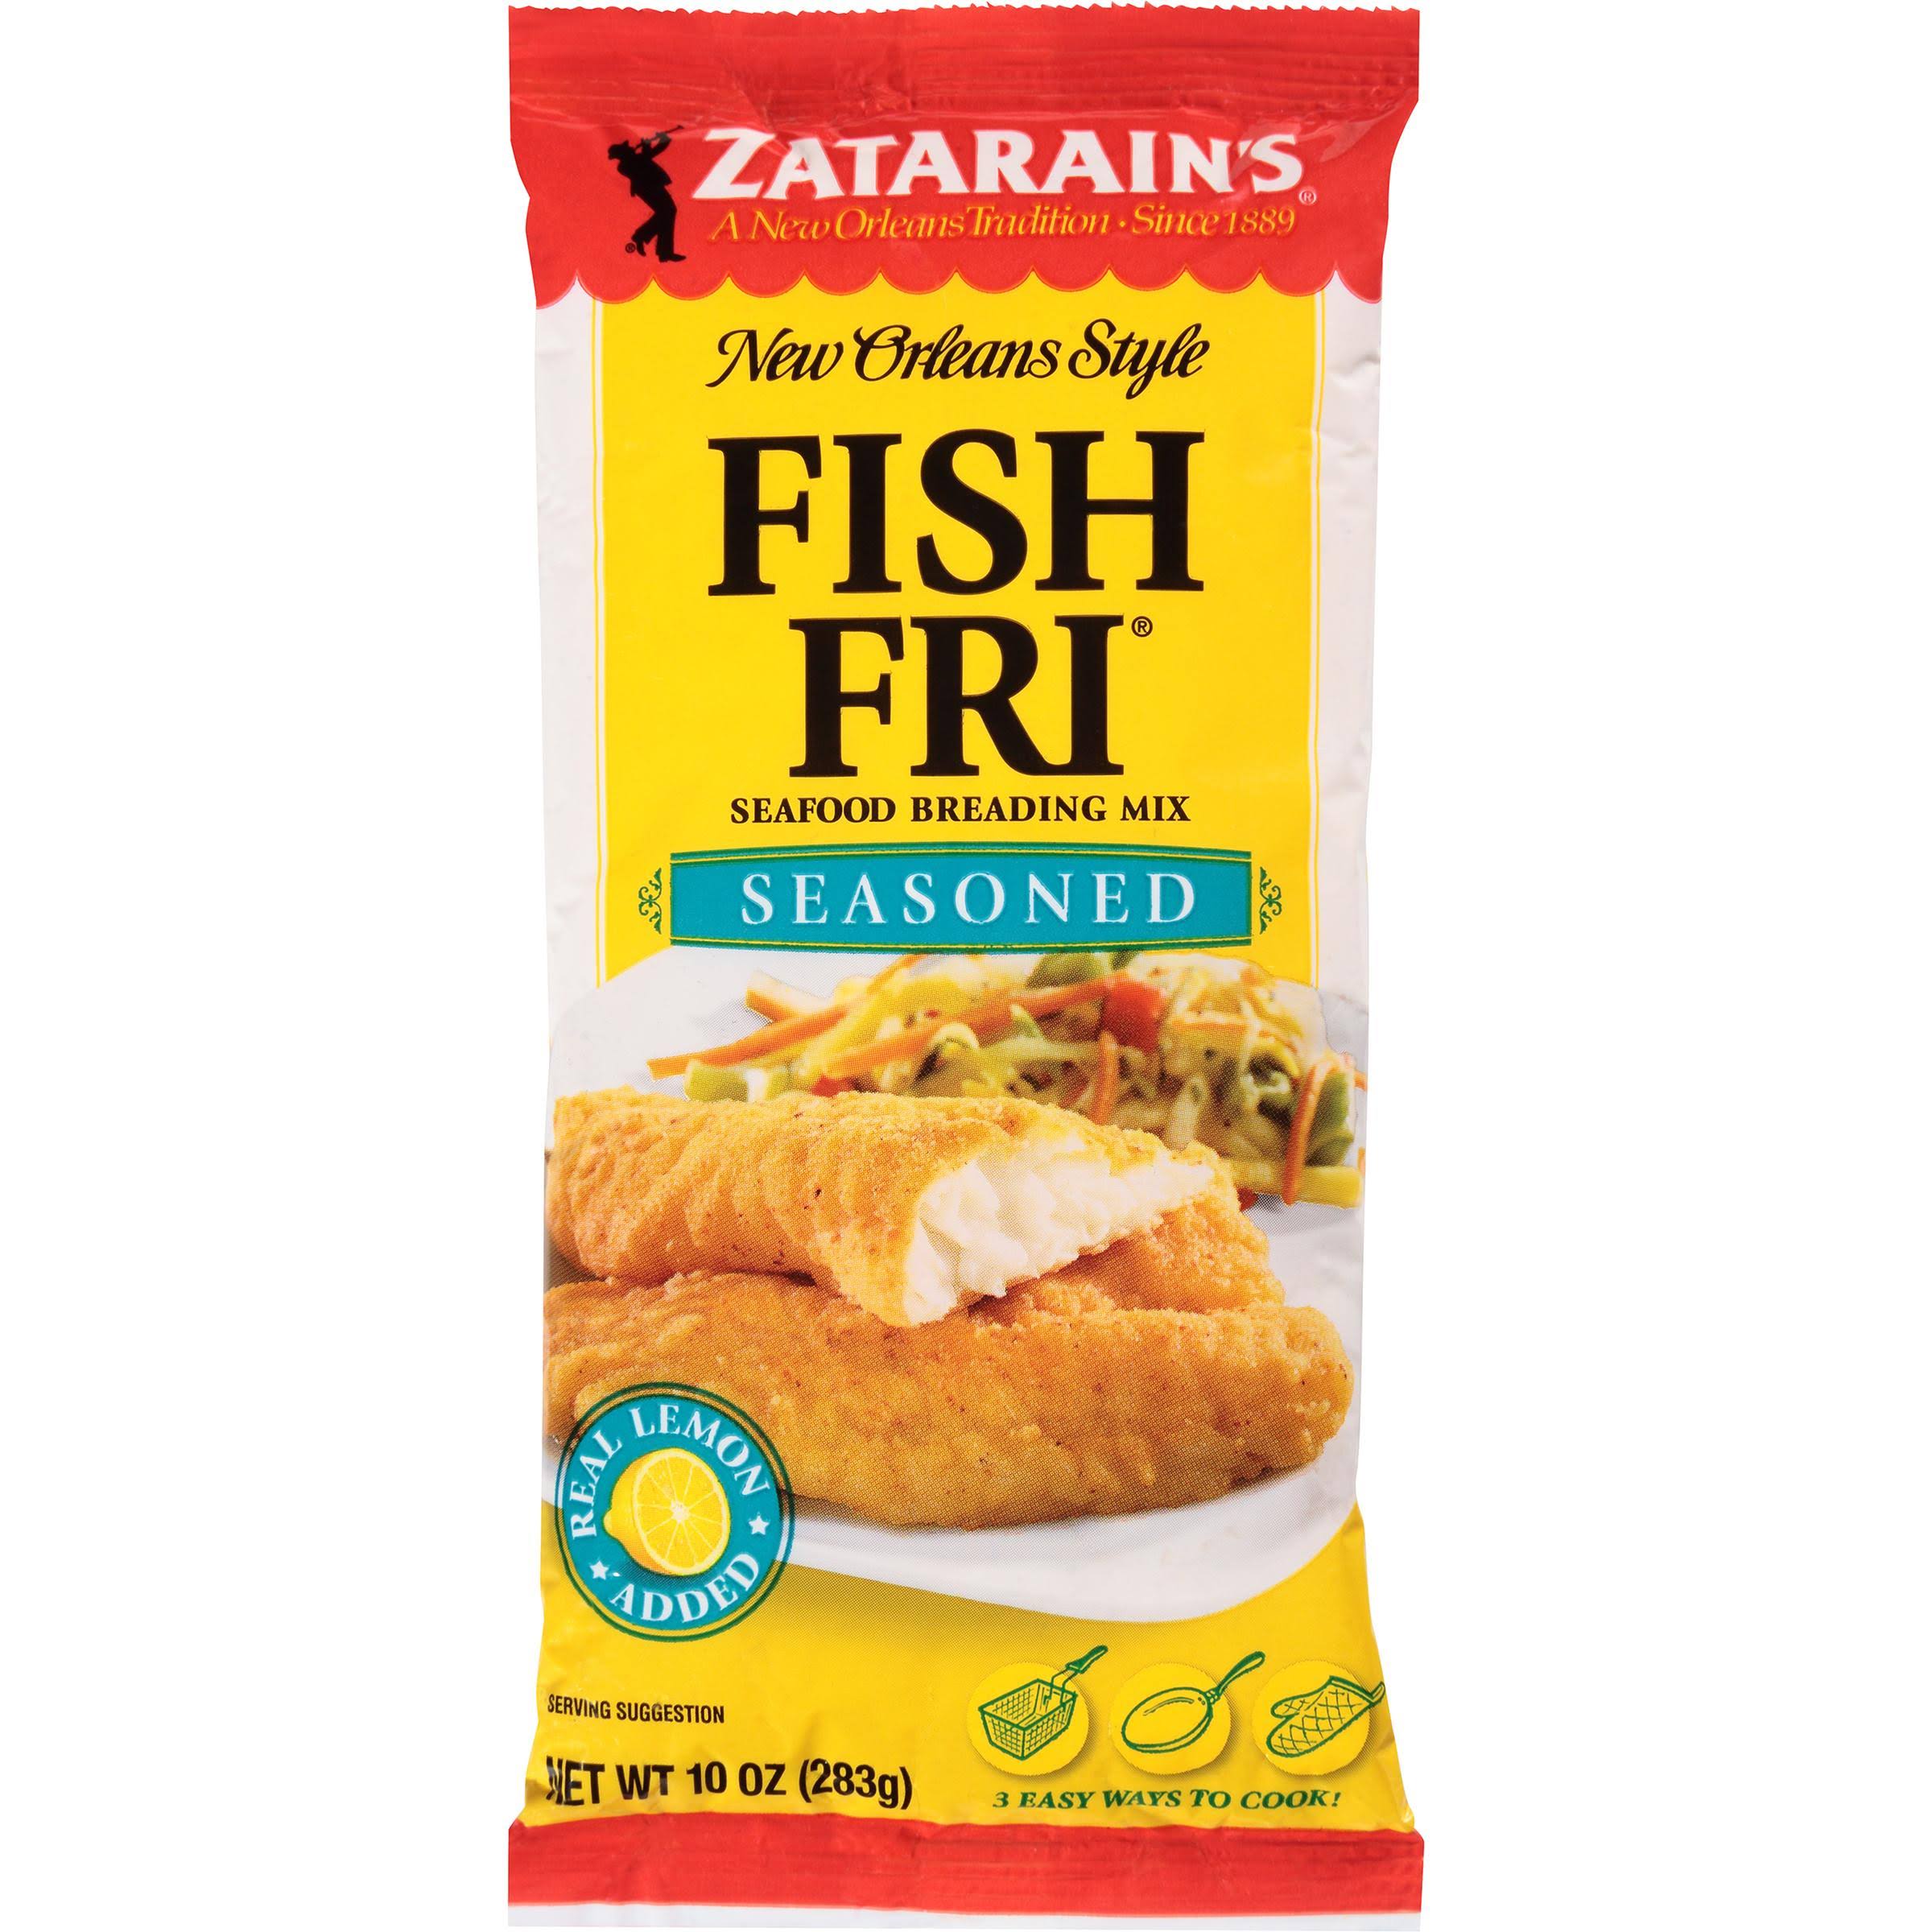 Zatarain's Fish-fri Seasoned - 10oz